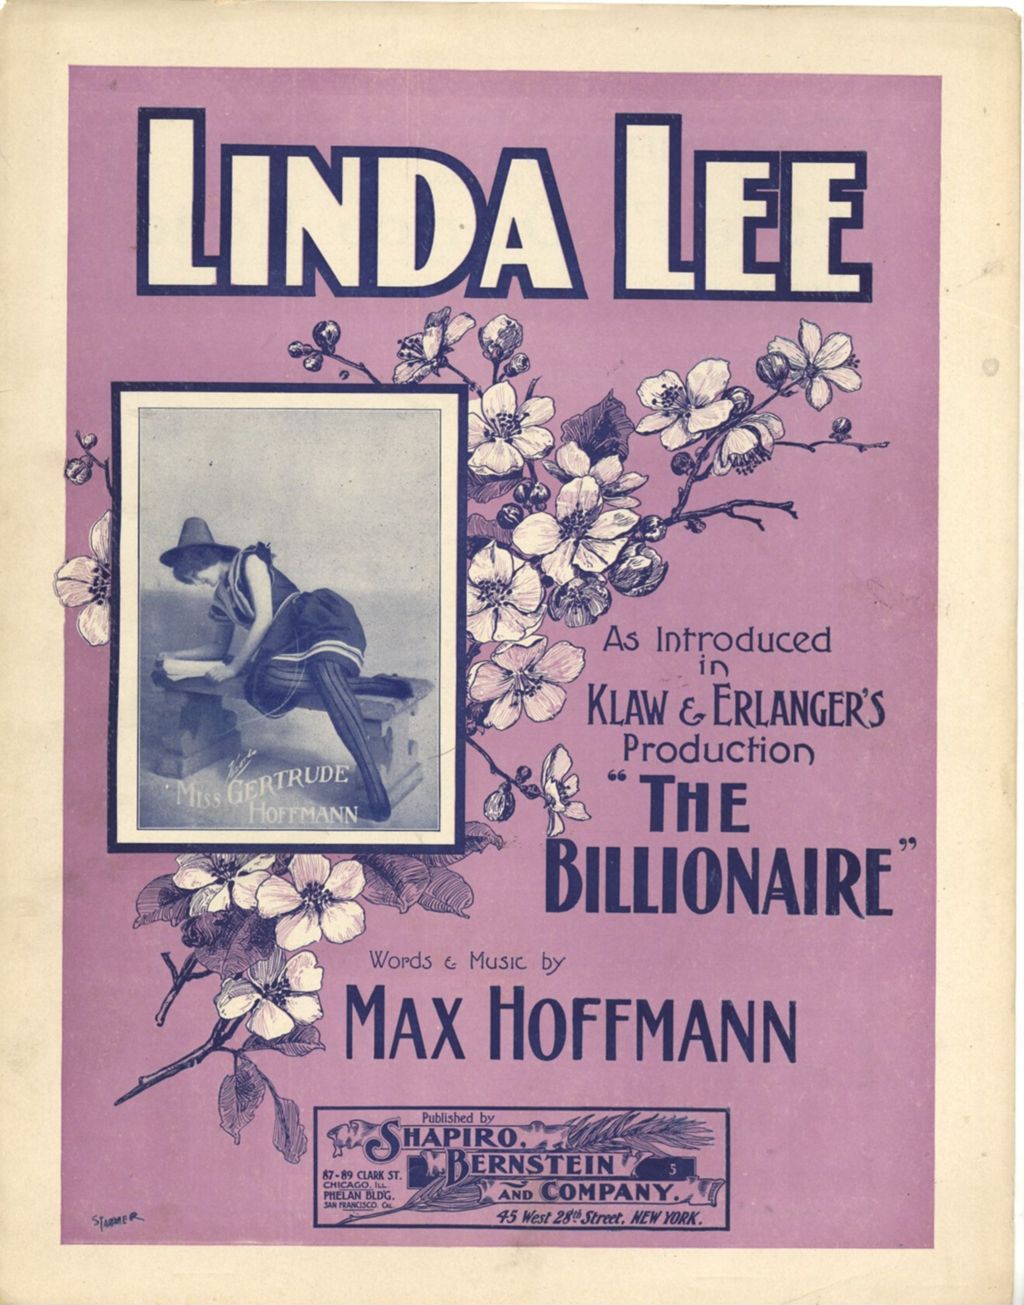 Miniature of Linda Lee